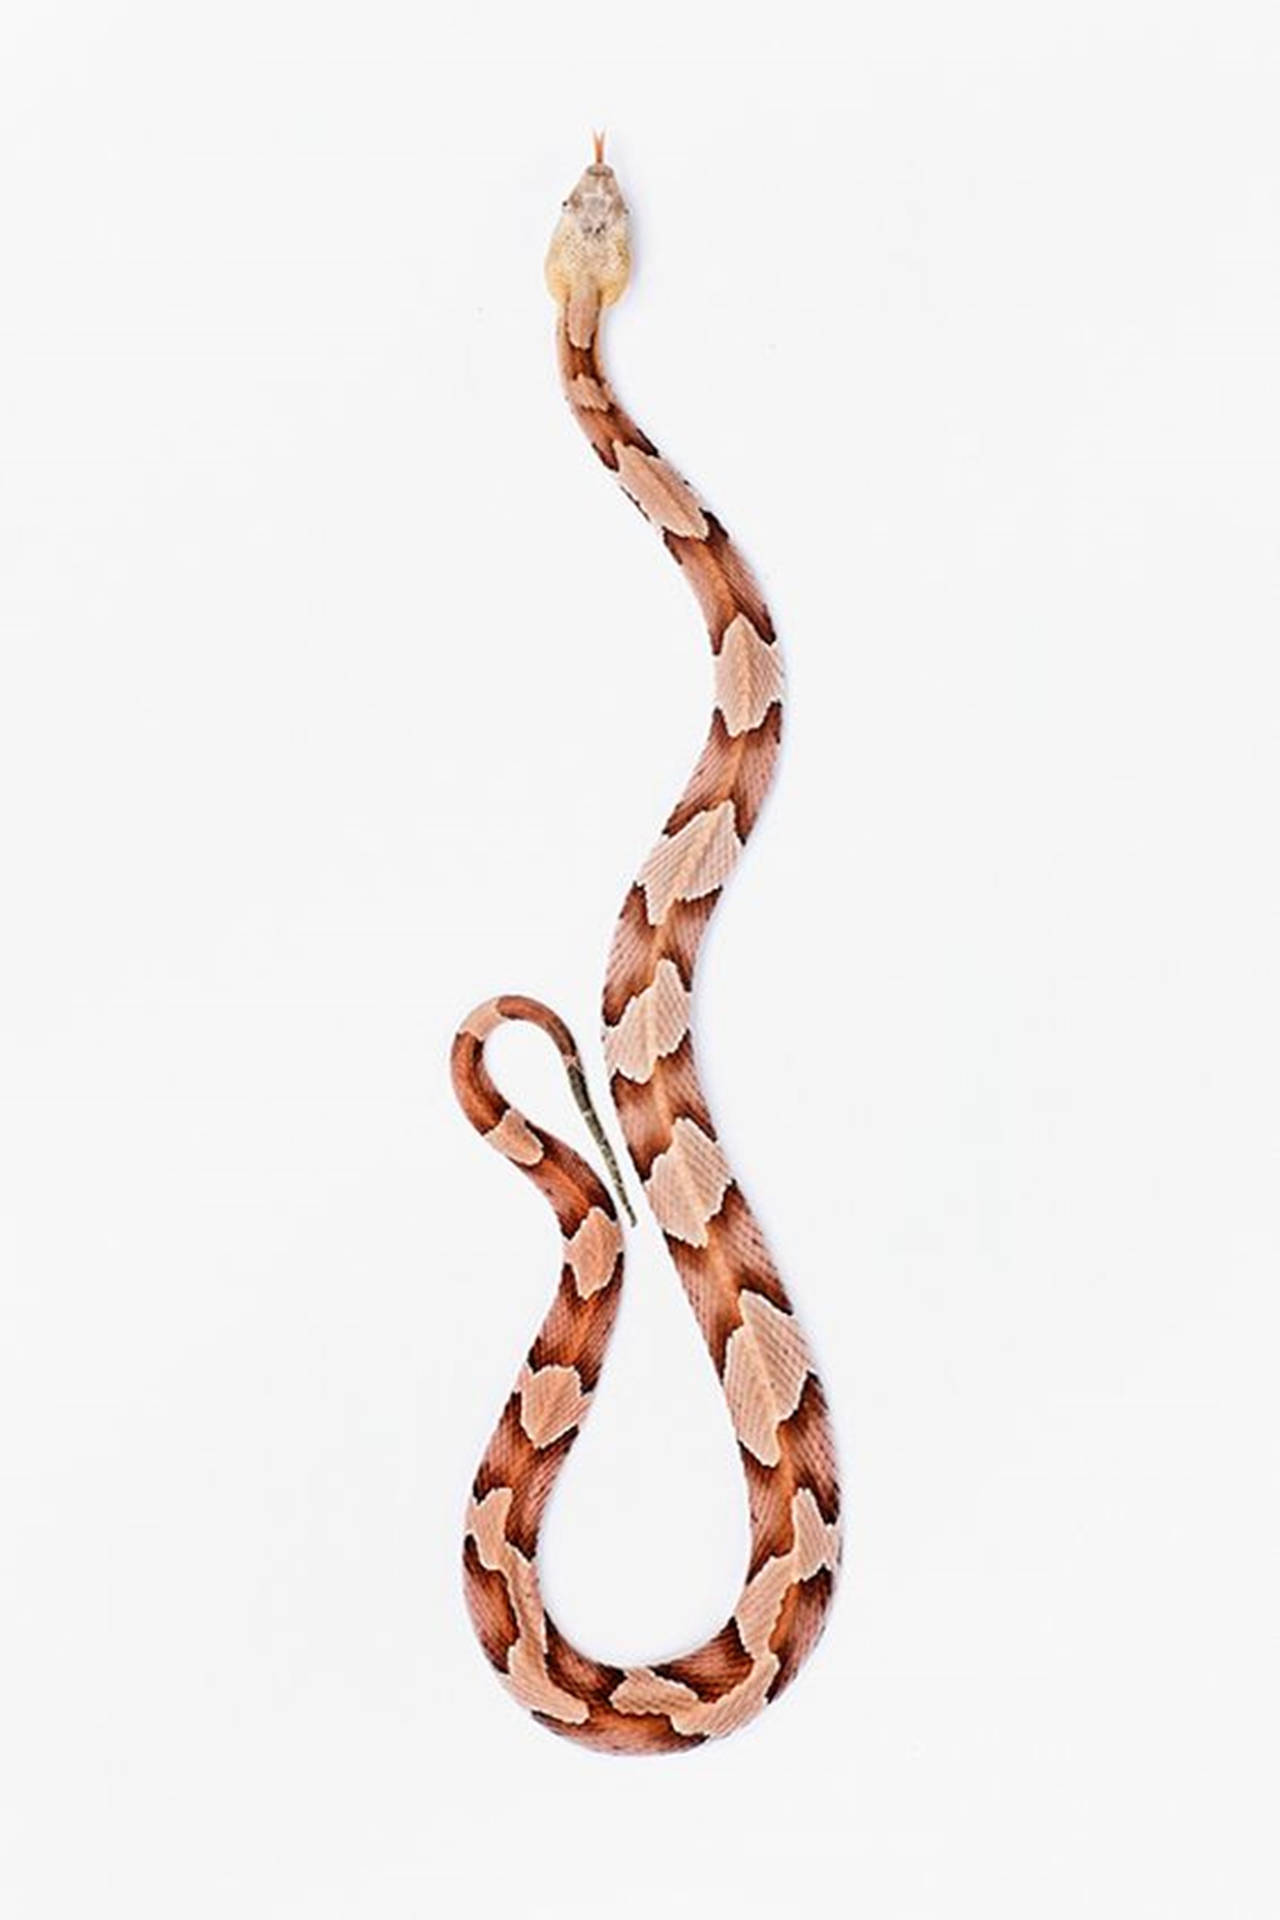 Copperhead Snake With Long Slender Body Wallpaper